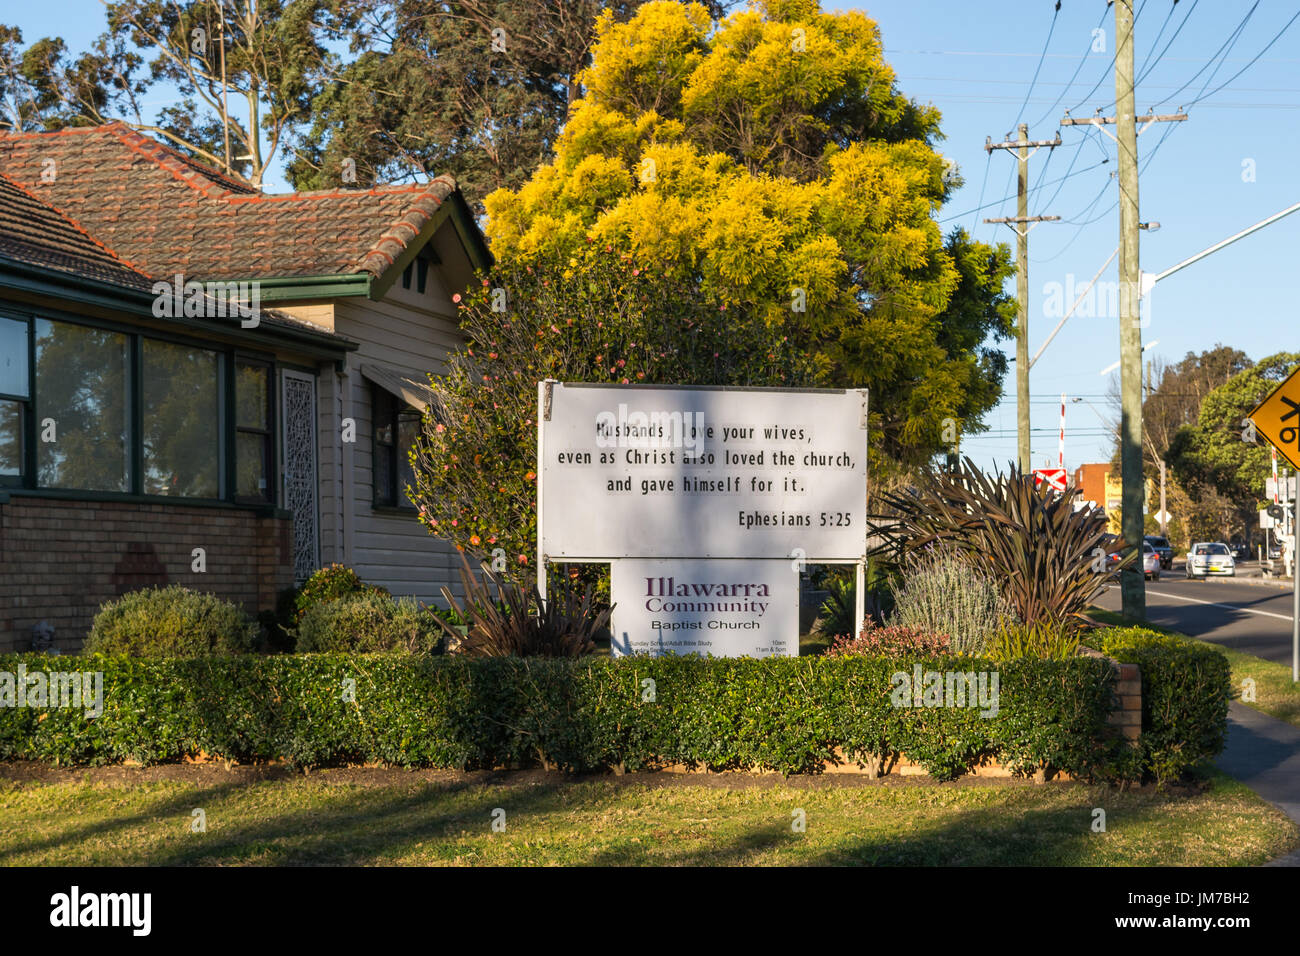 Illawarra Community Baptist Church Stockfoto